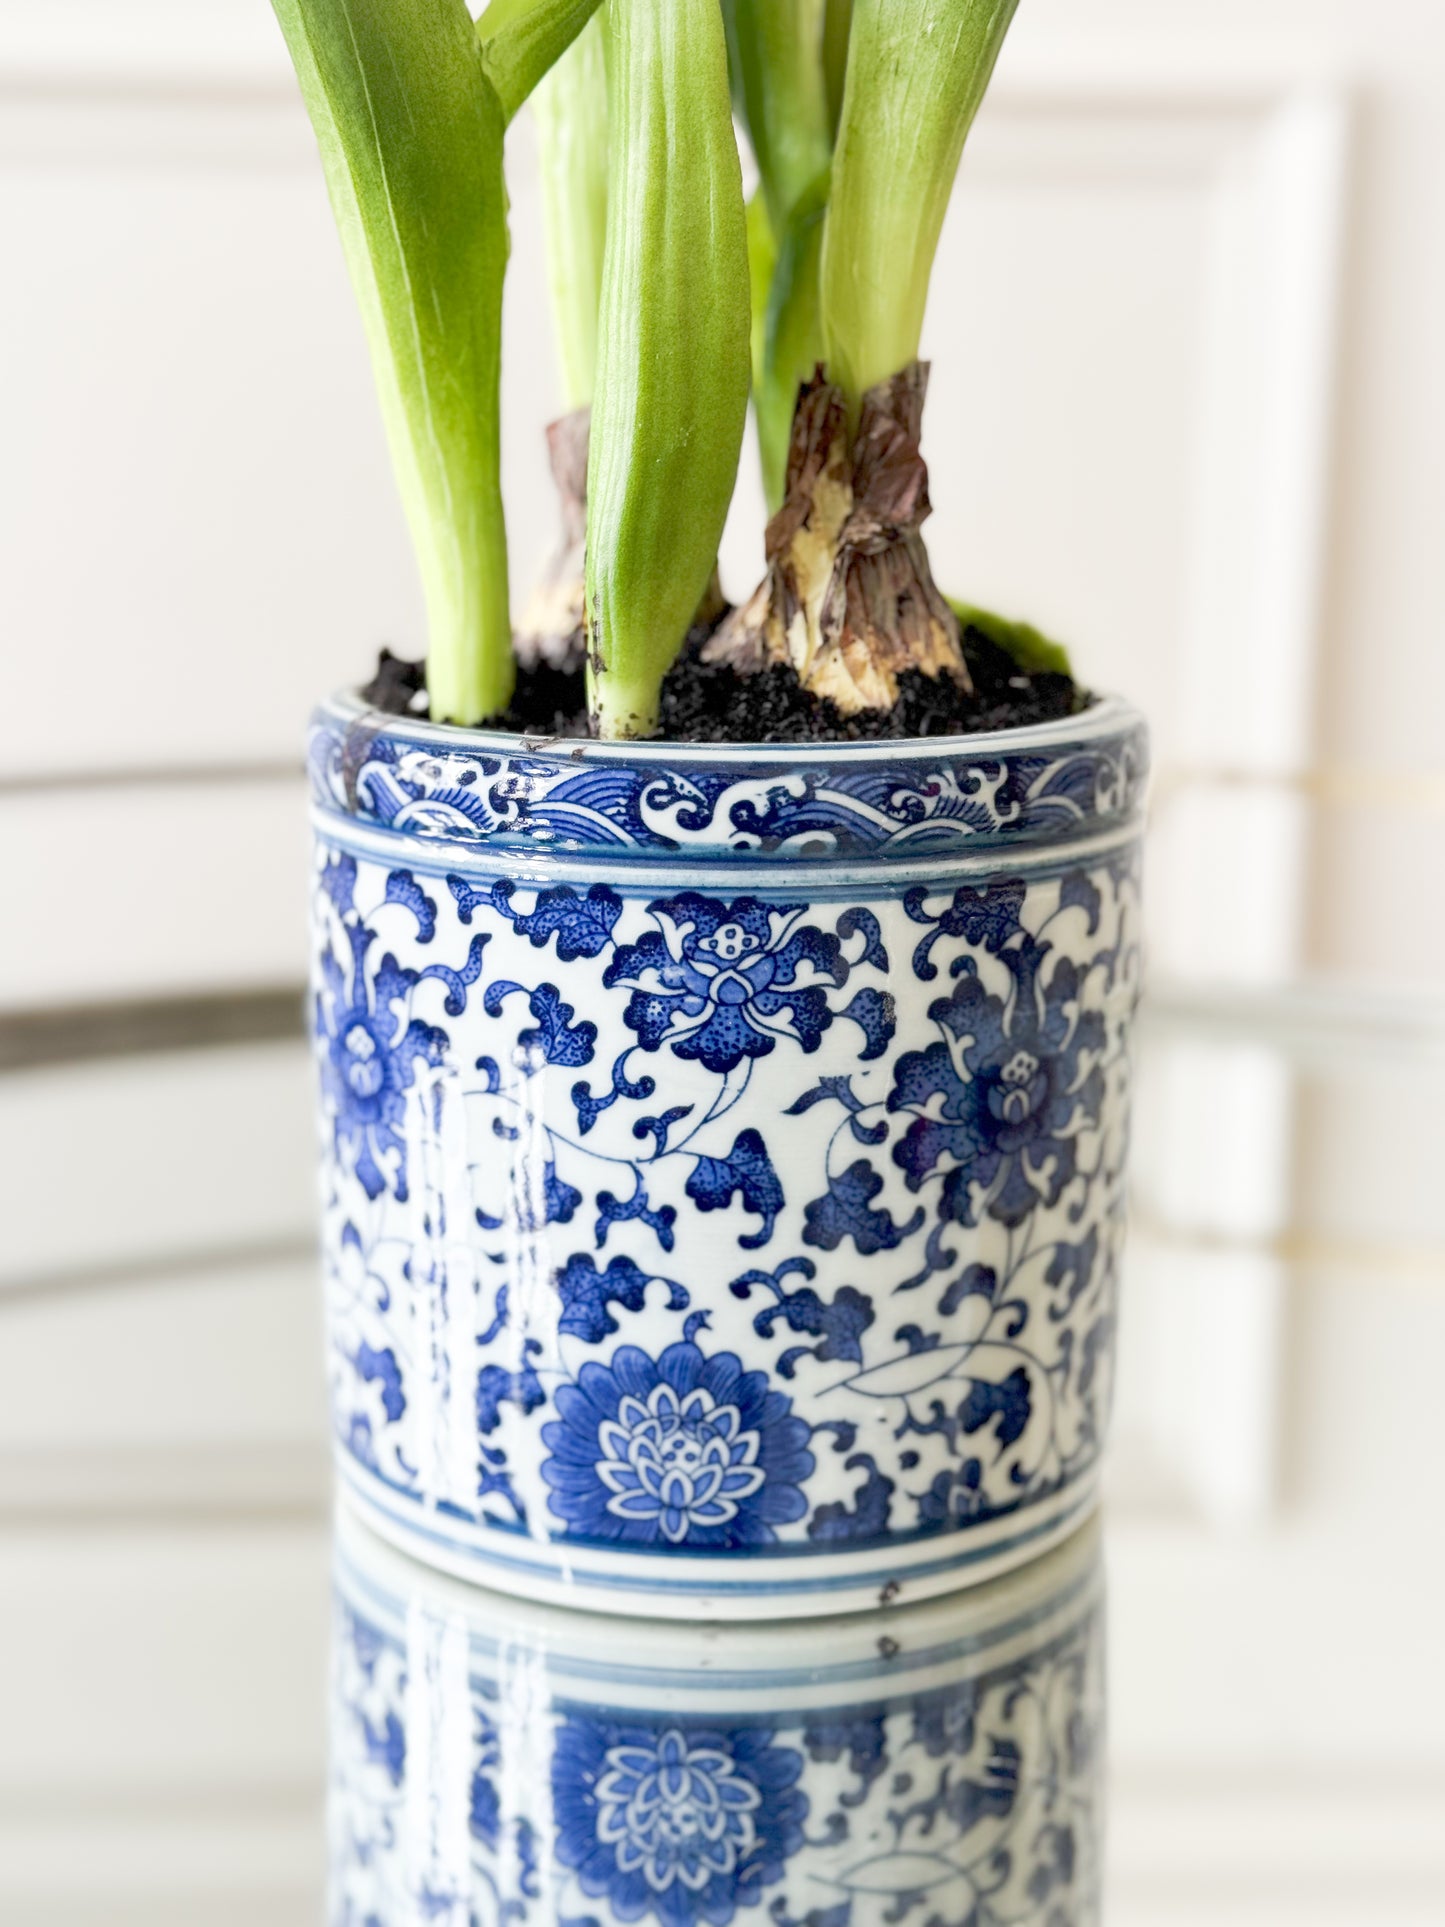 Tulips In Blue And White Ceramic Vase